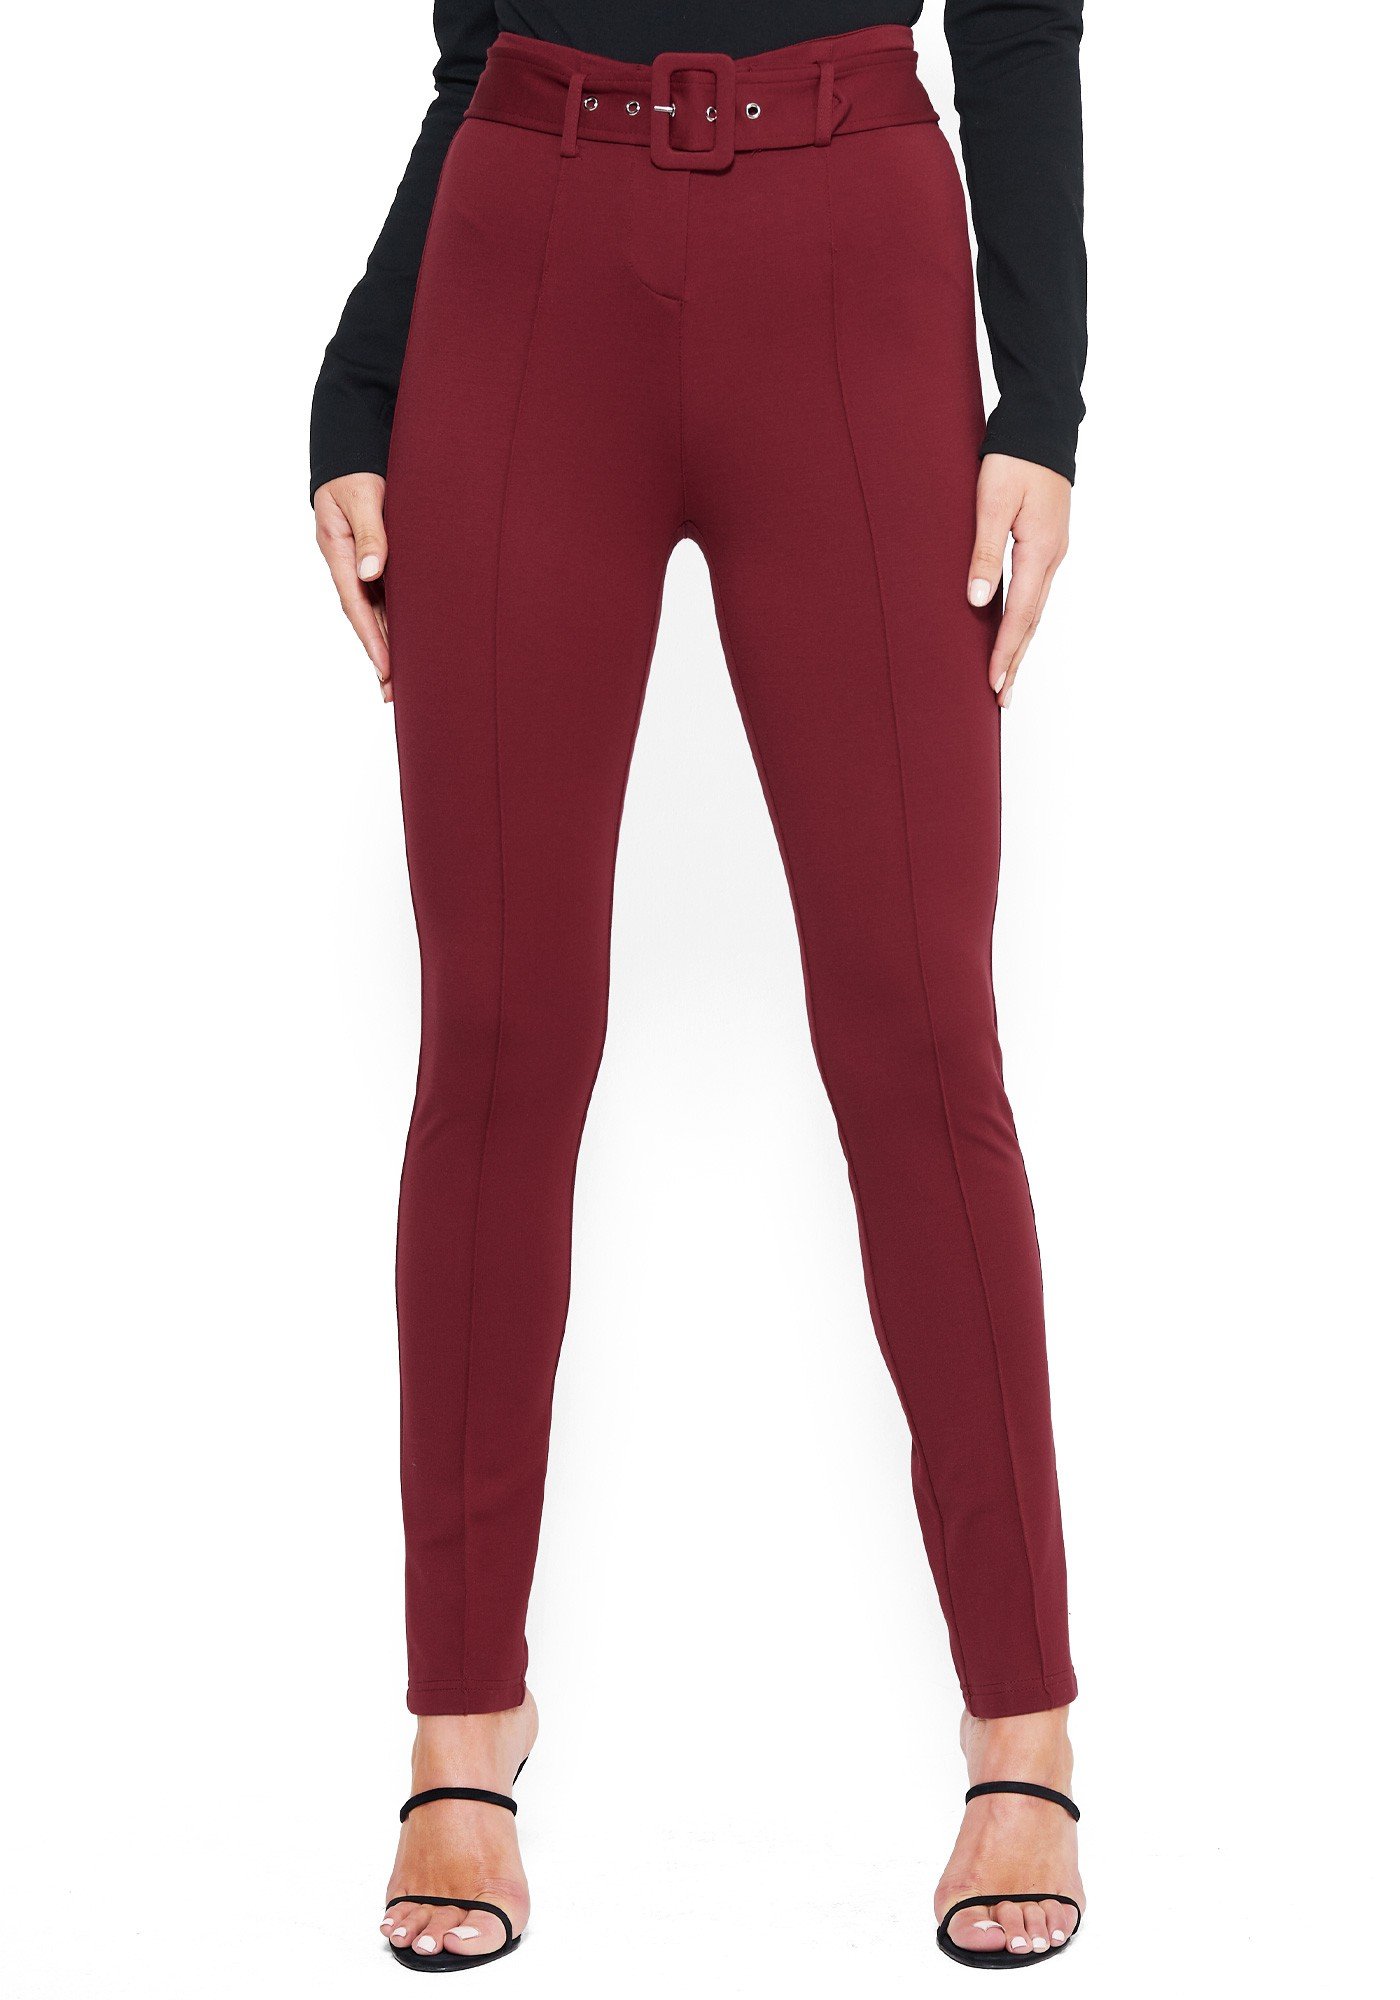 Bebe Women's Belted Straight Leg Trousers, Size 2 in Crimson Spandex/Nylon